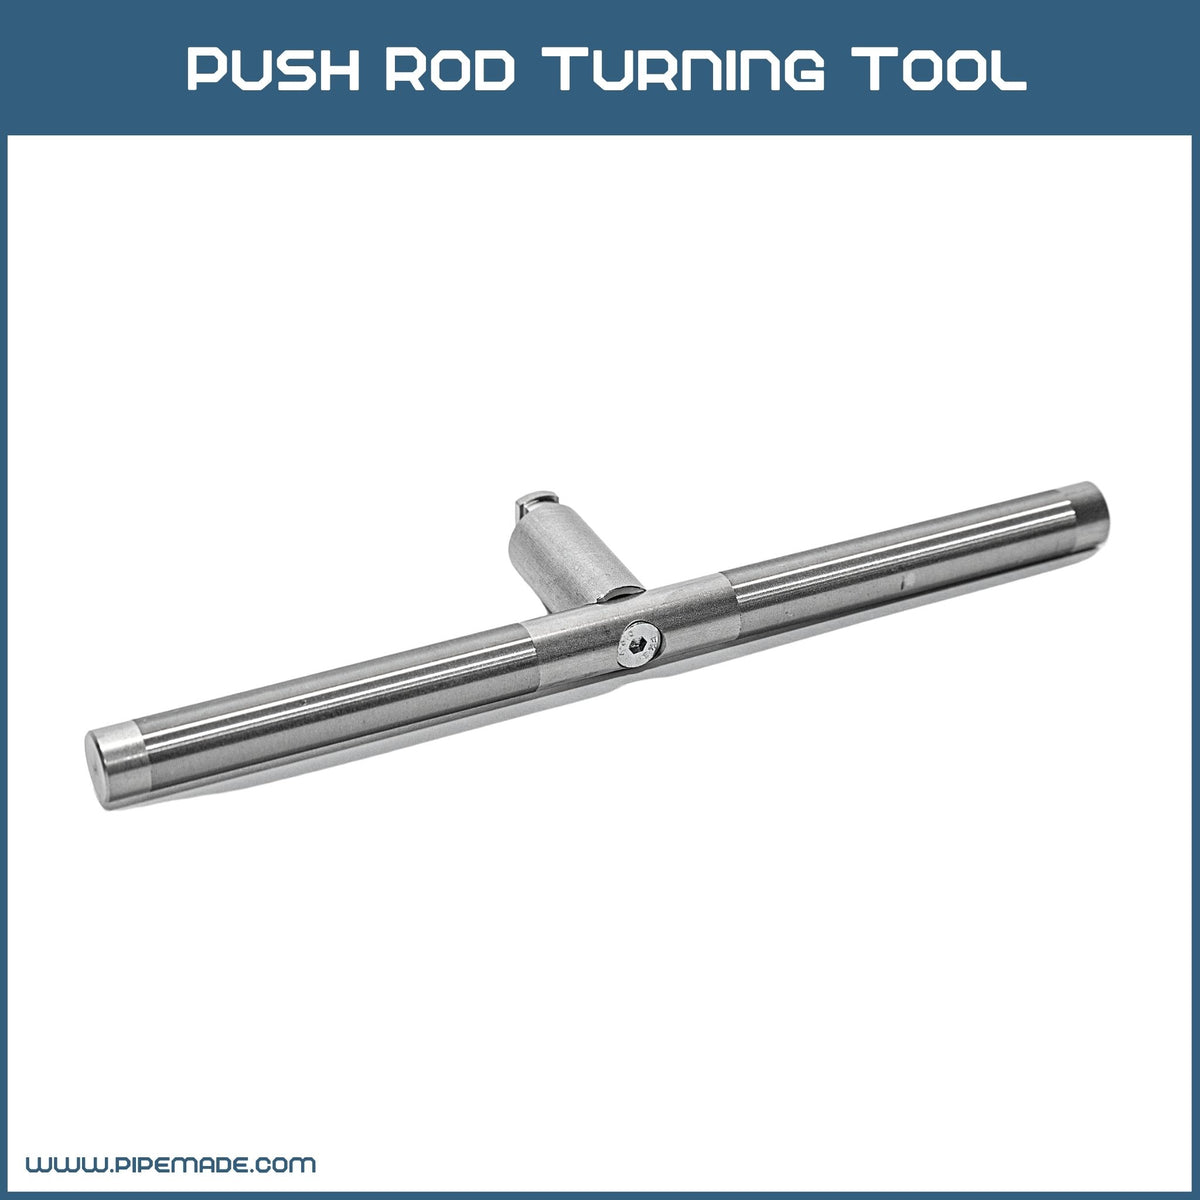 Turning Tool for Standard Push Rod